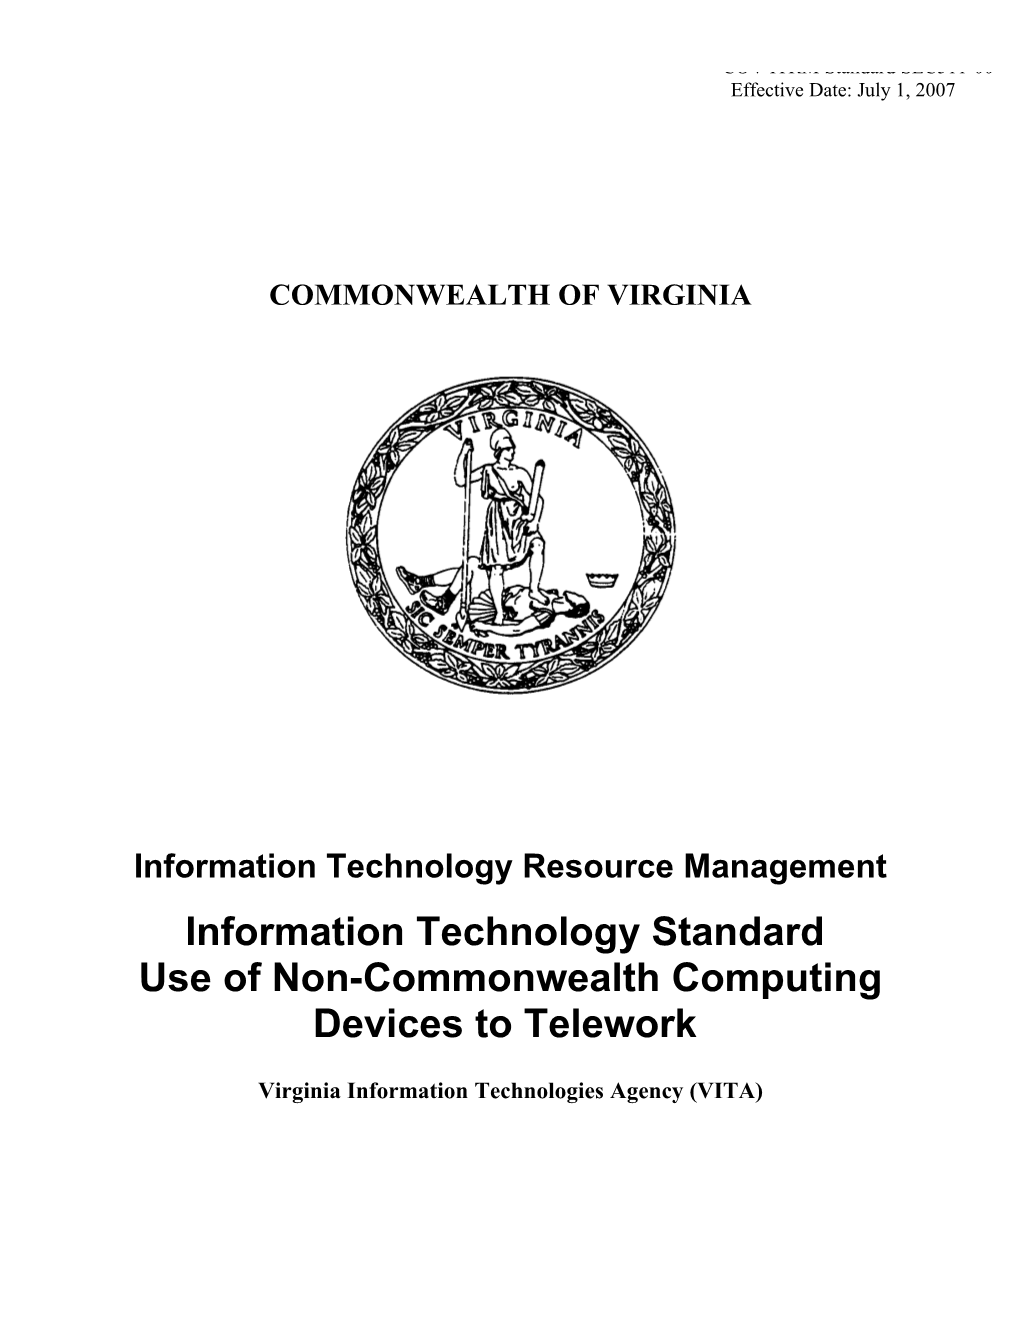 Information Technology Security Management Standarditrm Standard SEC501-01